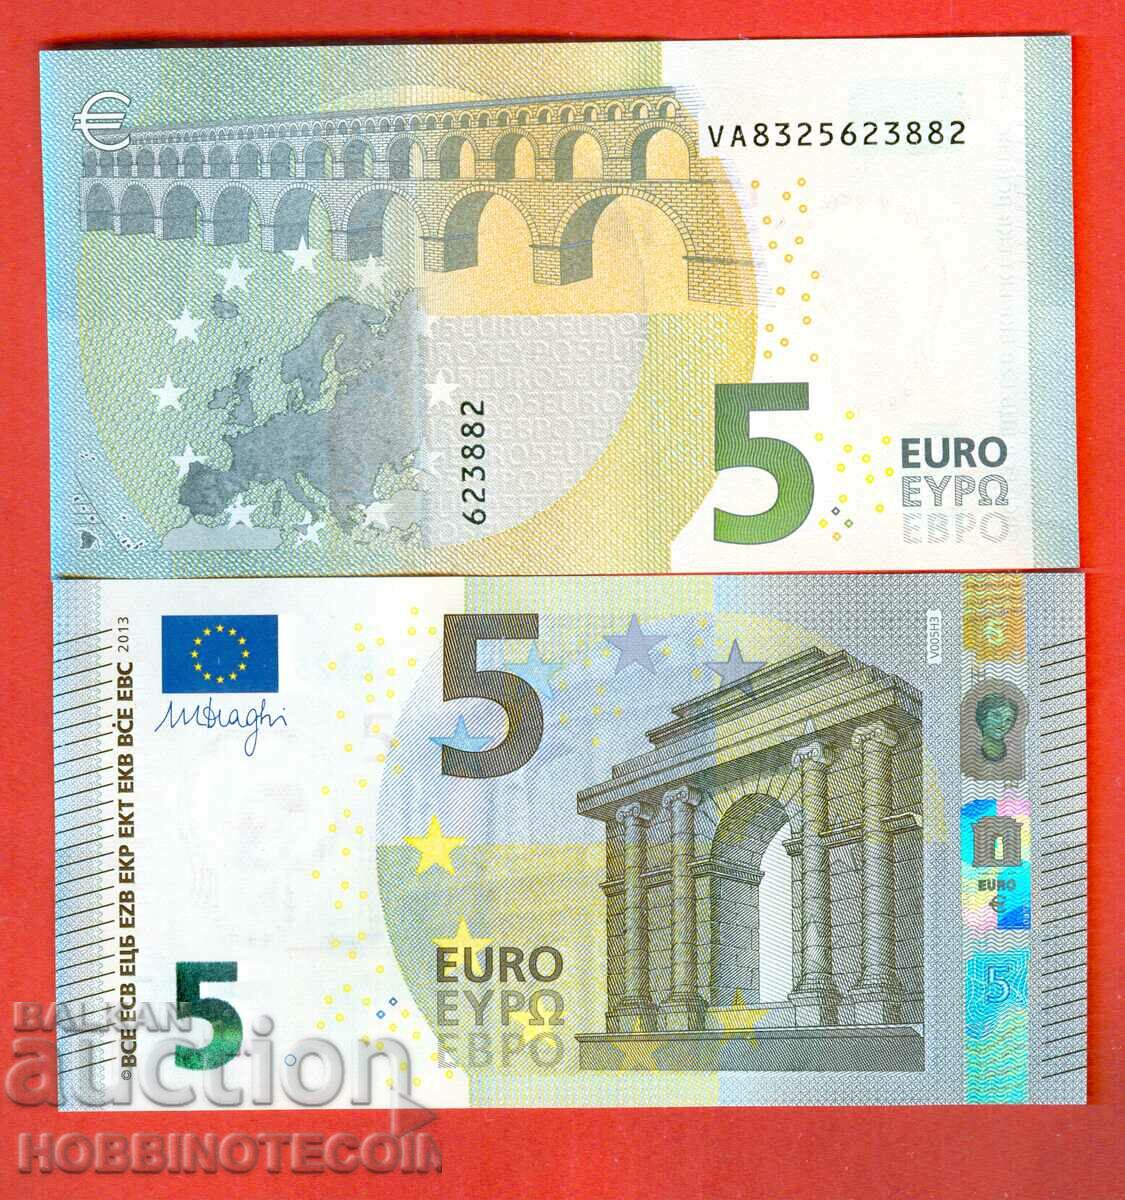 EUROPE EUROPA 5 Euro issue issue 2013 - VA - NEW UNC